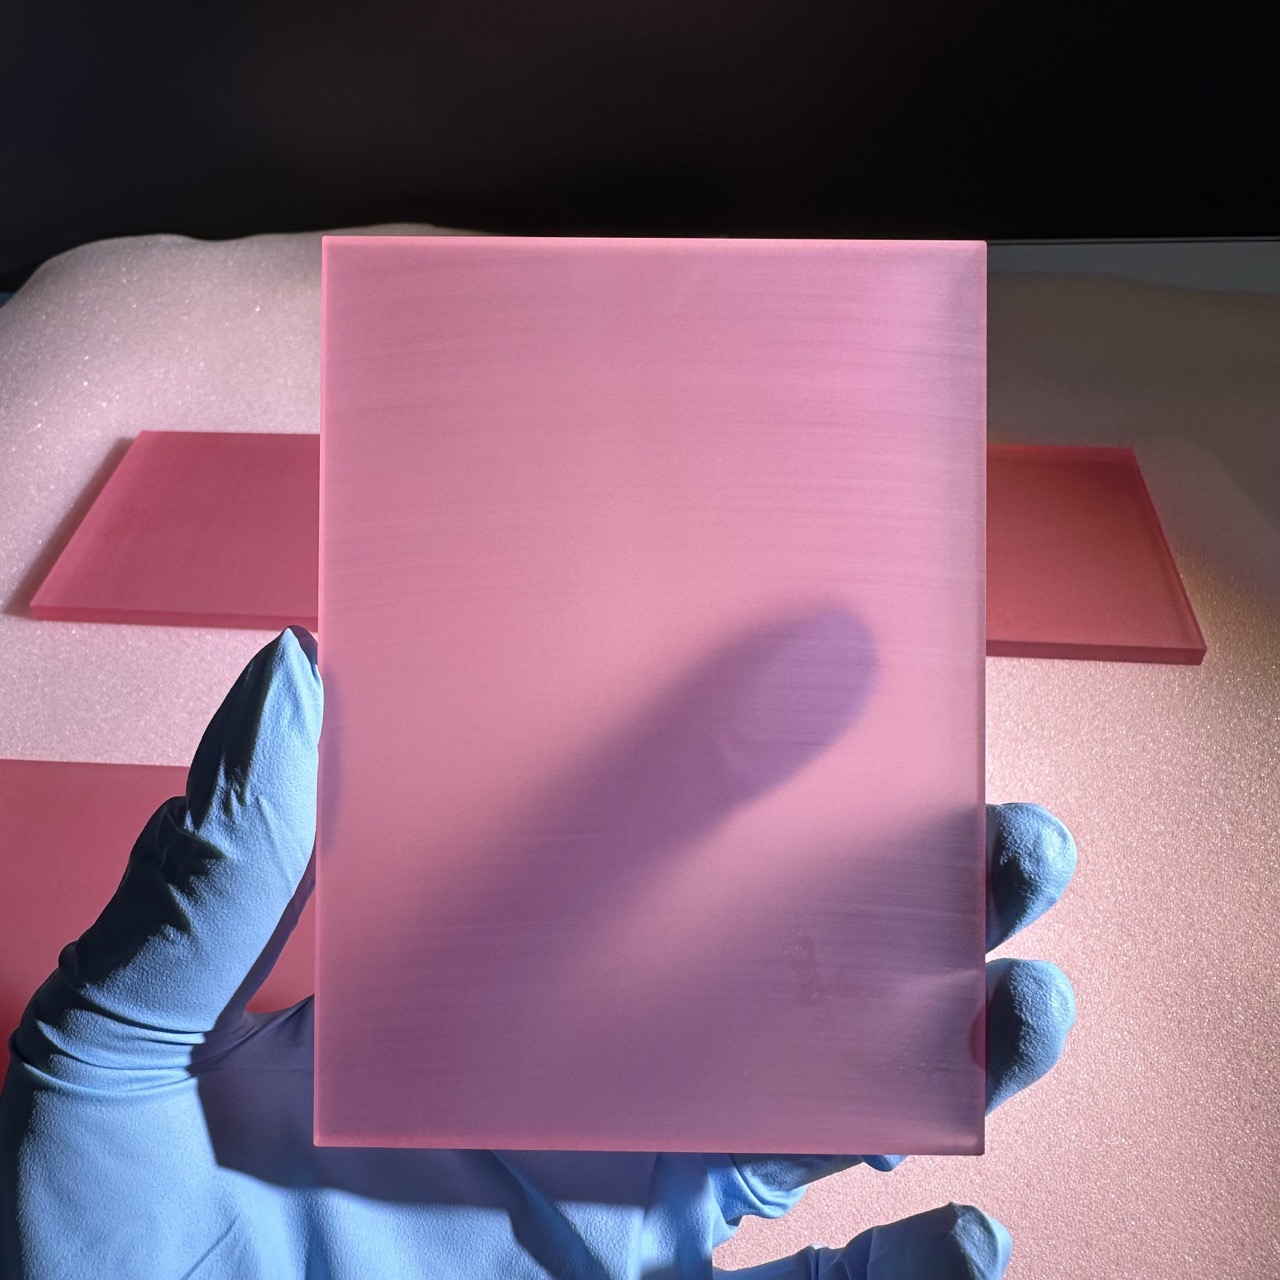 Método de procesamento de superficie de varillas láser de cristal de zafiro dopadas con titanio (2)